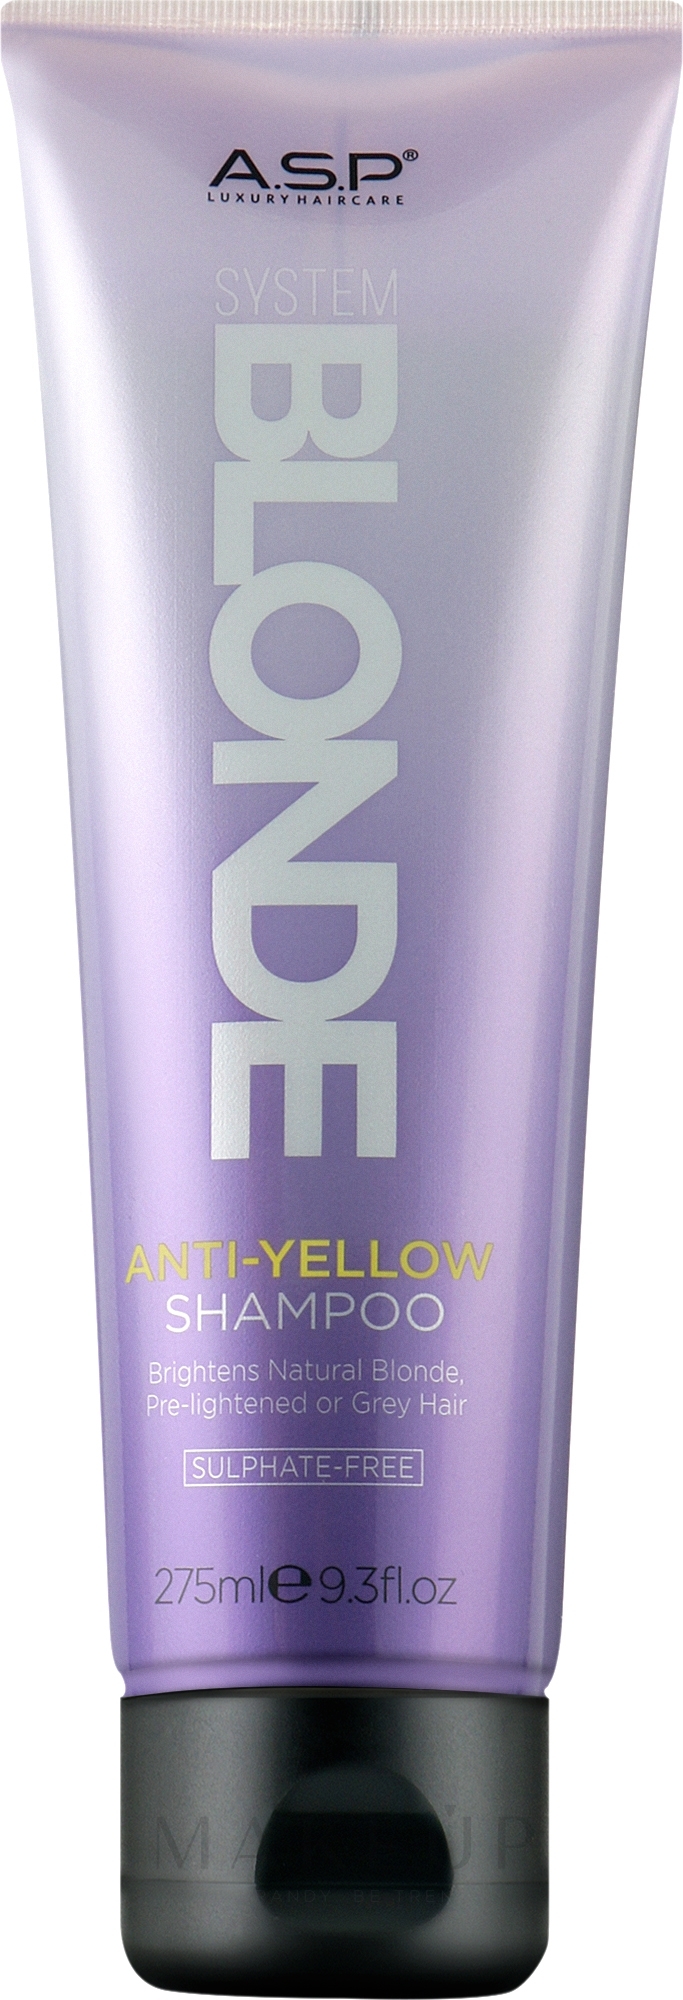 Anti-Gelbstich Shampoo - Affinage System Blonde Anti-Yellow Shampoo — Bild 275 ml